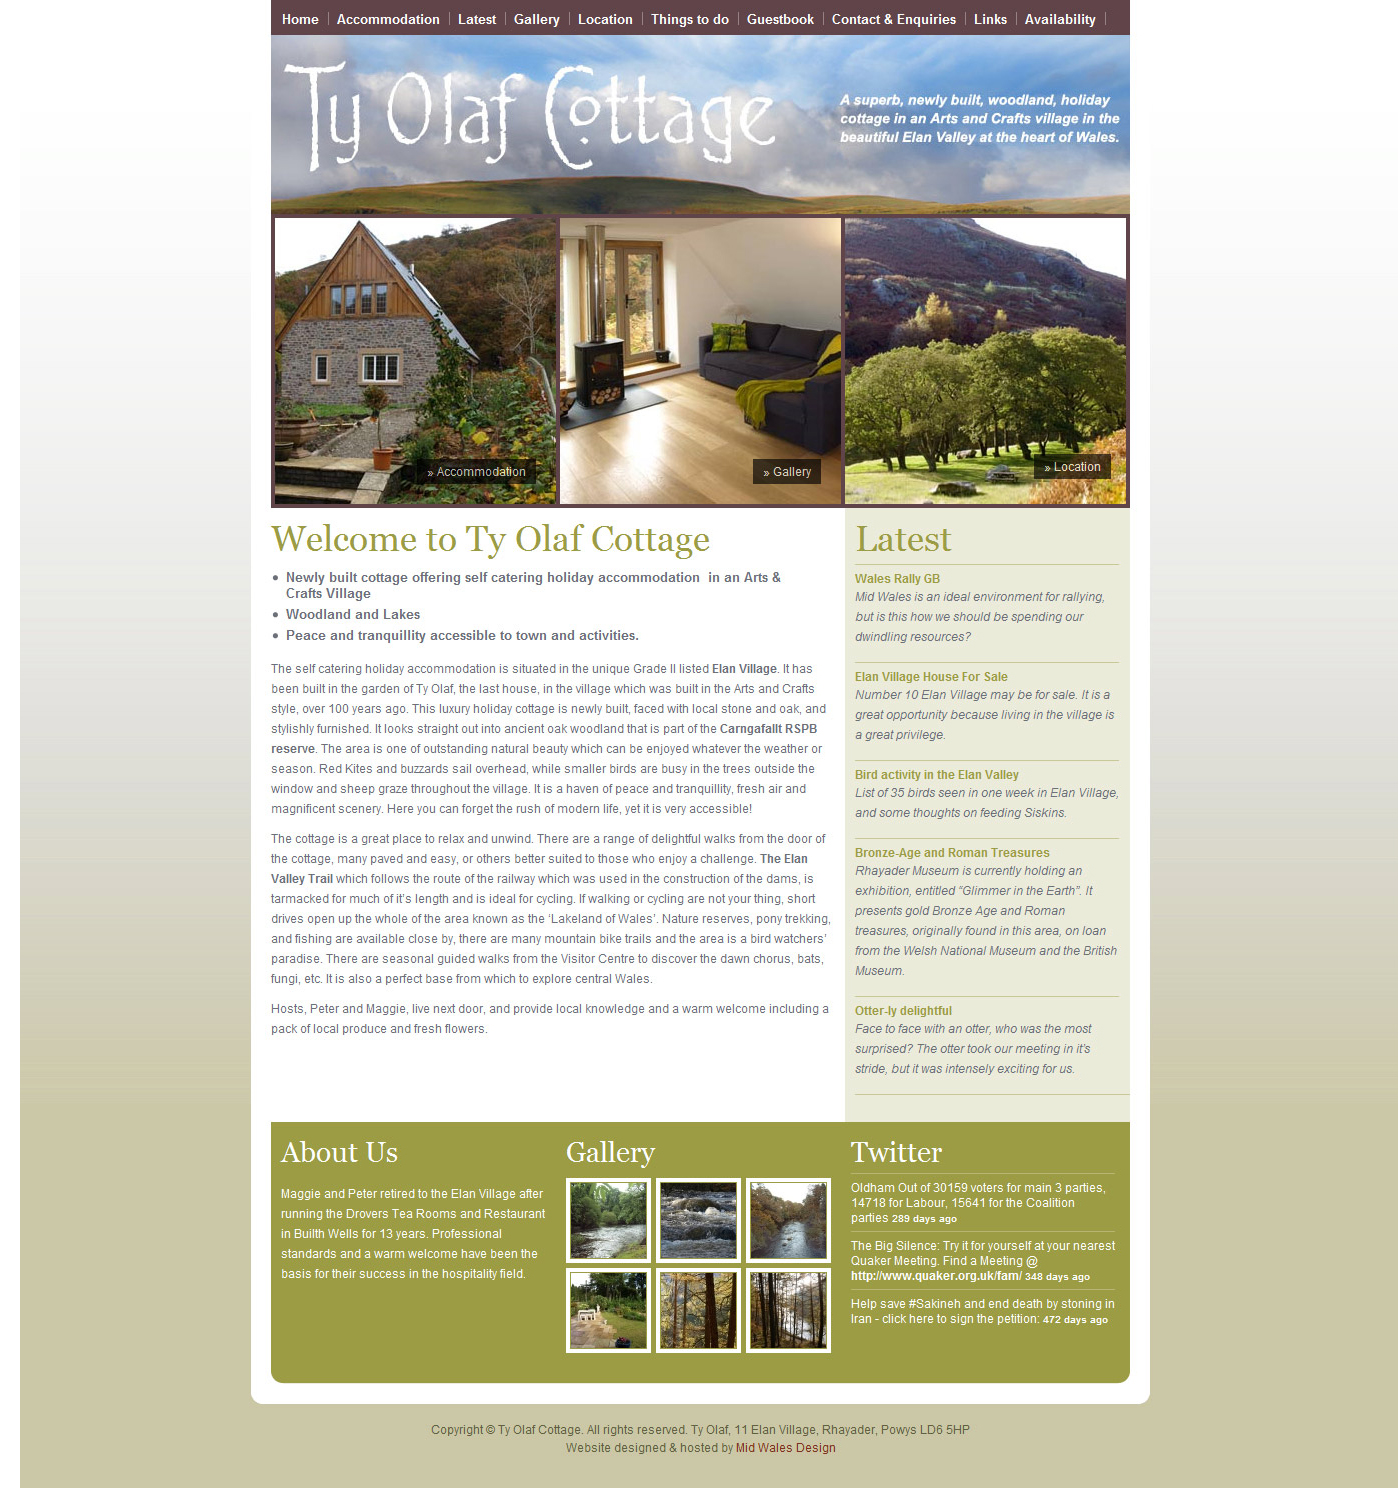 Ty Olaf Cottage website